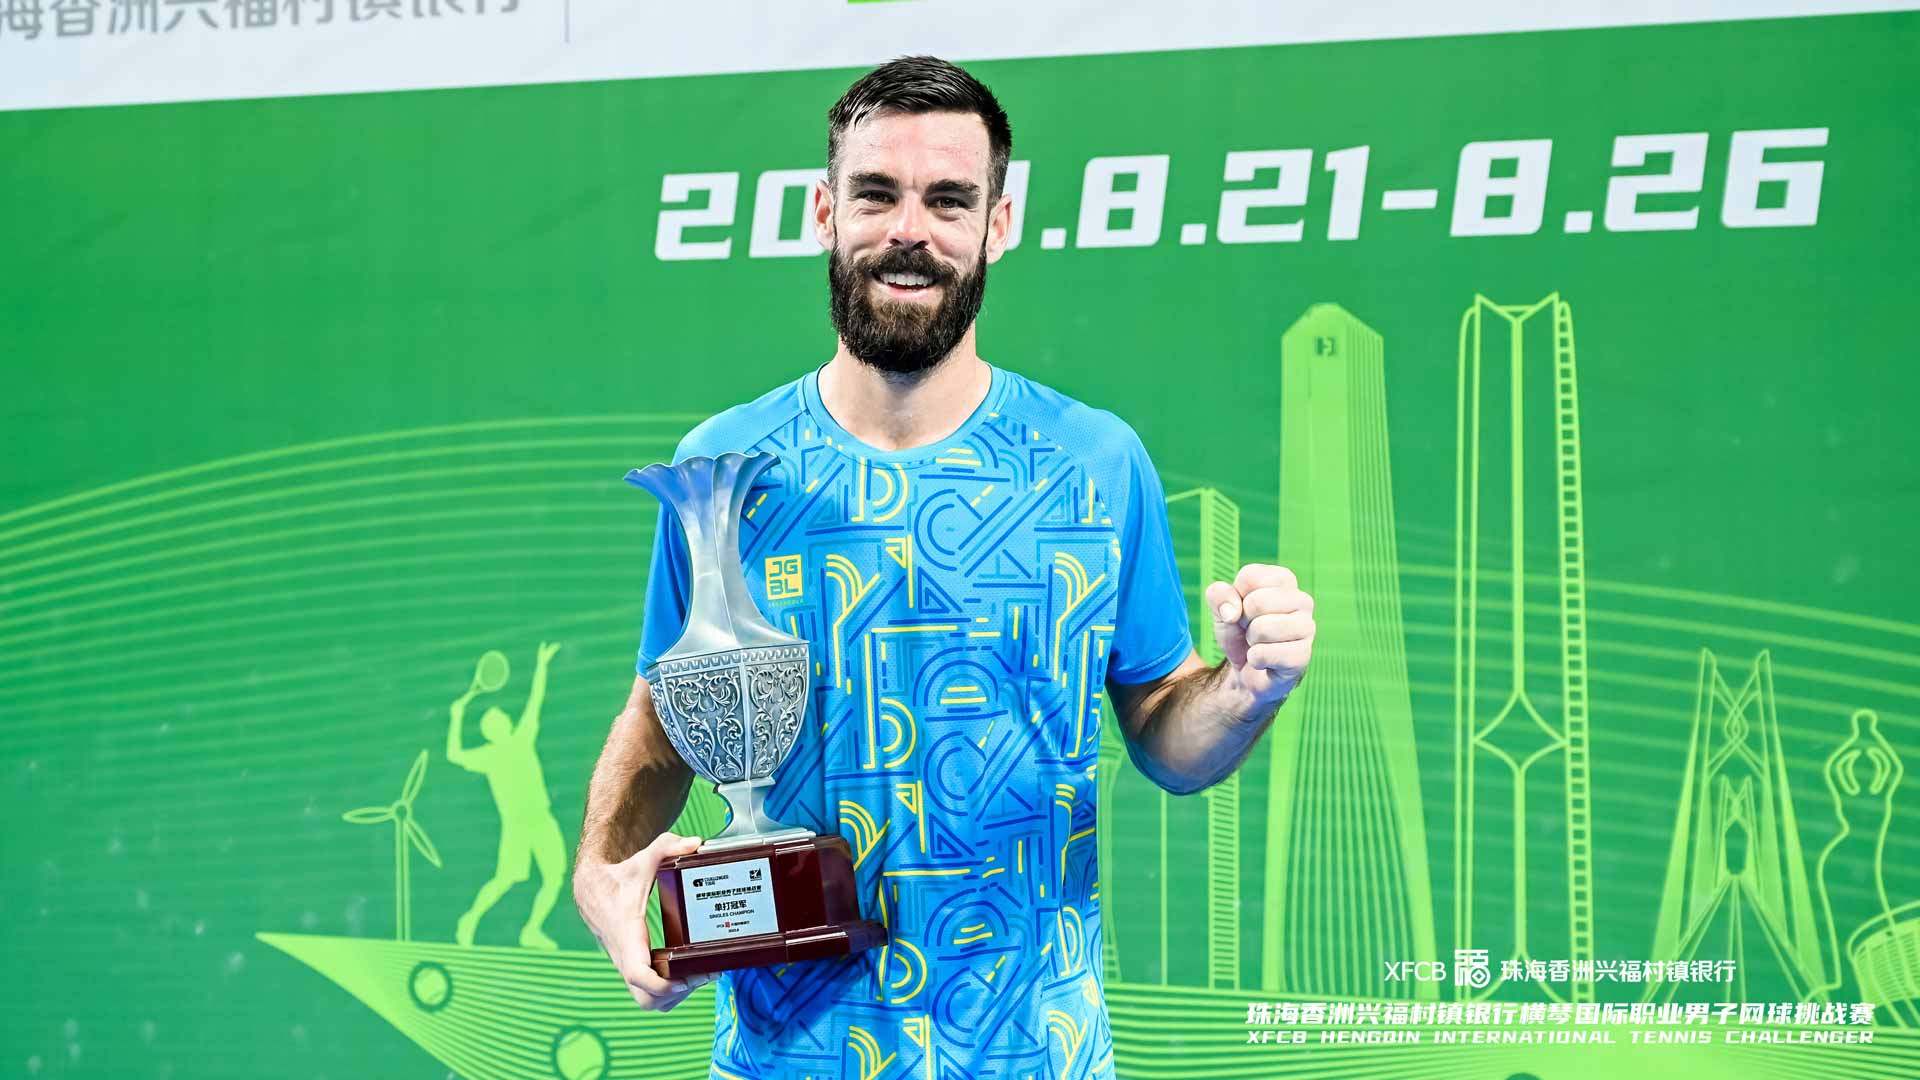 <a href='https://www.atptour.com/en/players/arthur-weber/w0a4/overview'>Arthur Weber</a> is crowned champion at the Zhuhai Challenger.